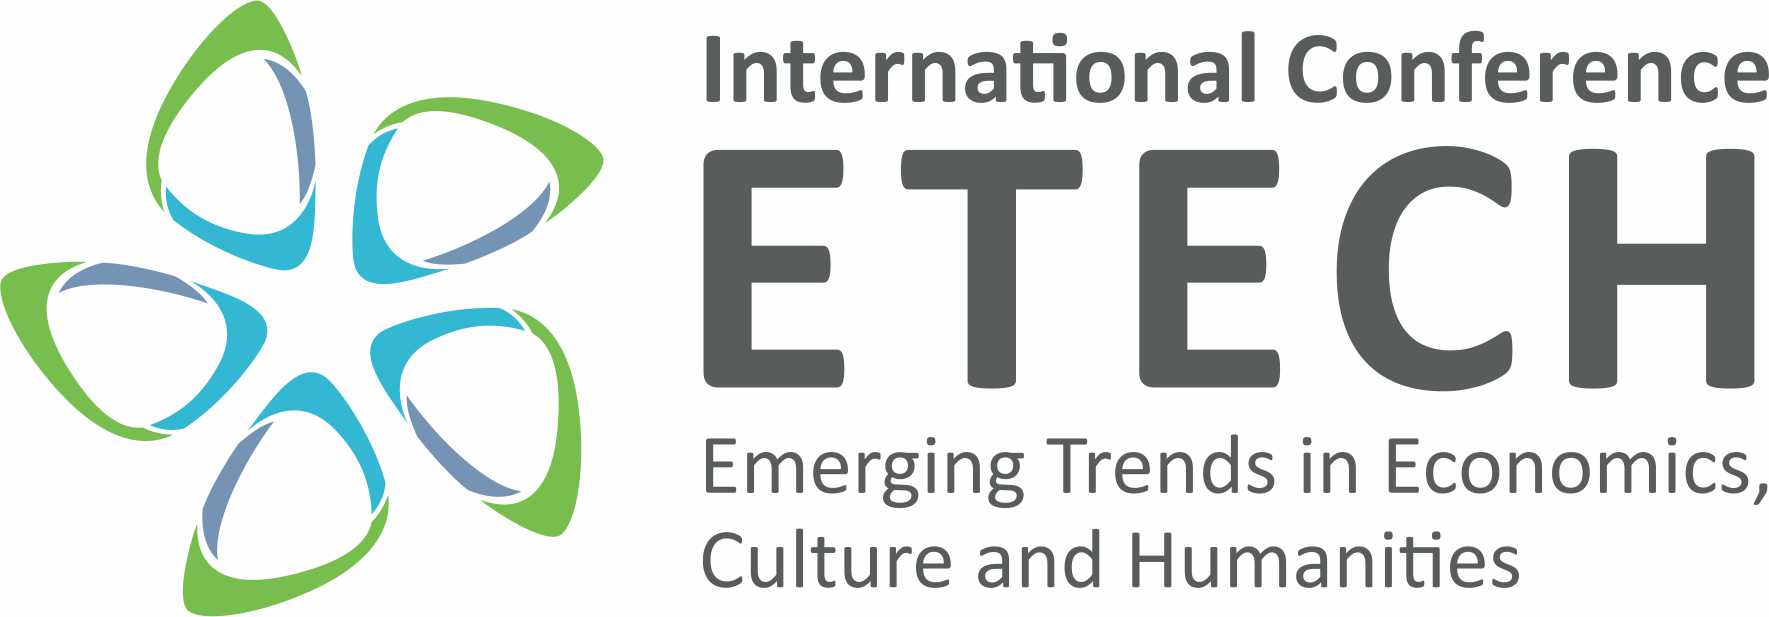 Emerging Trends in Economics, Culture and Humanities (etECH)